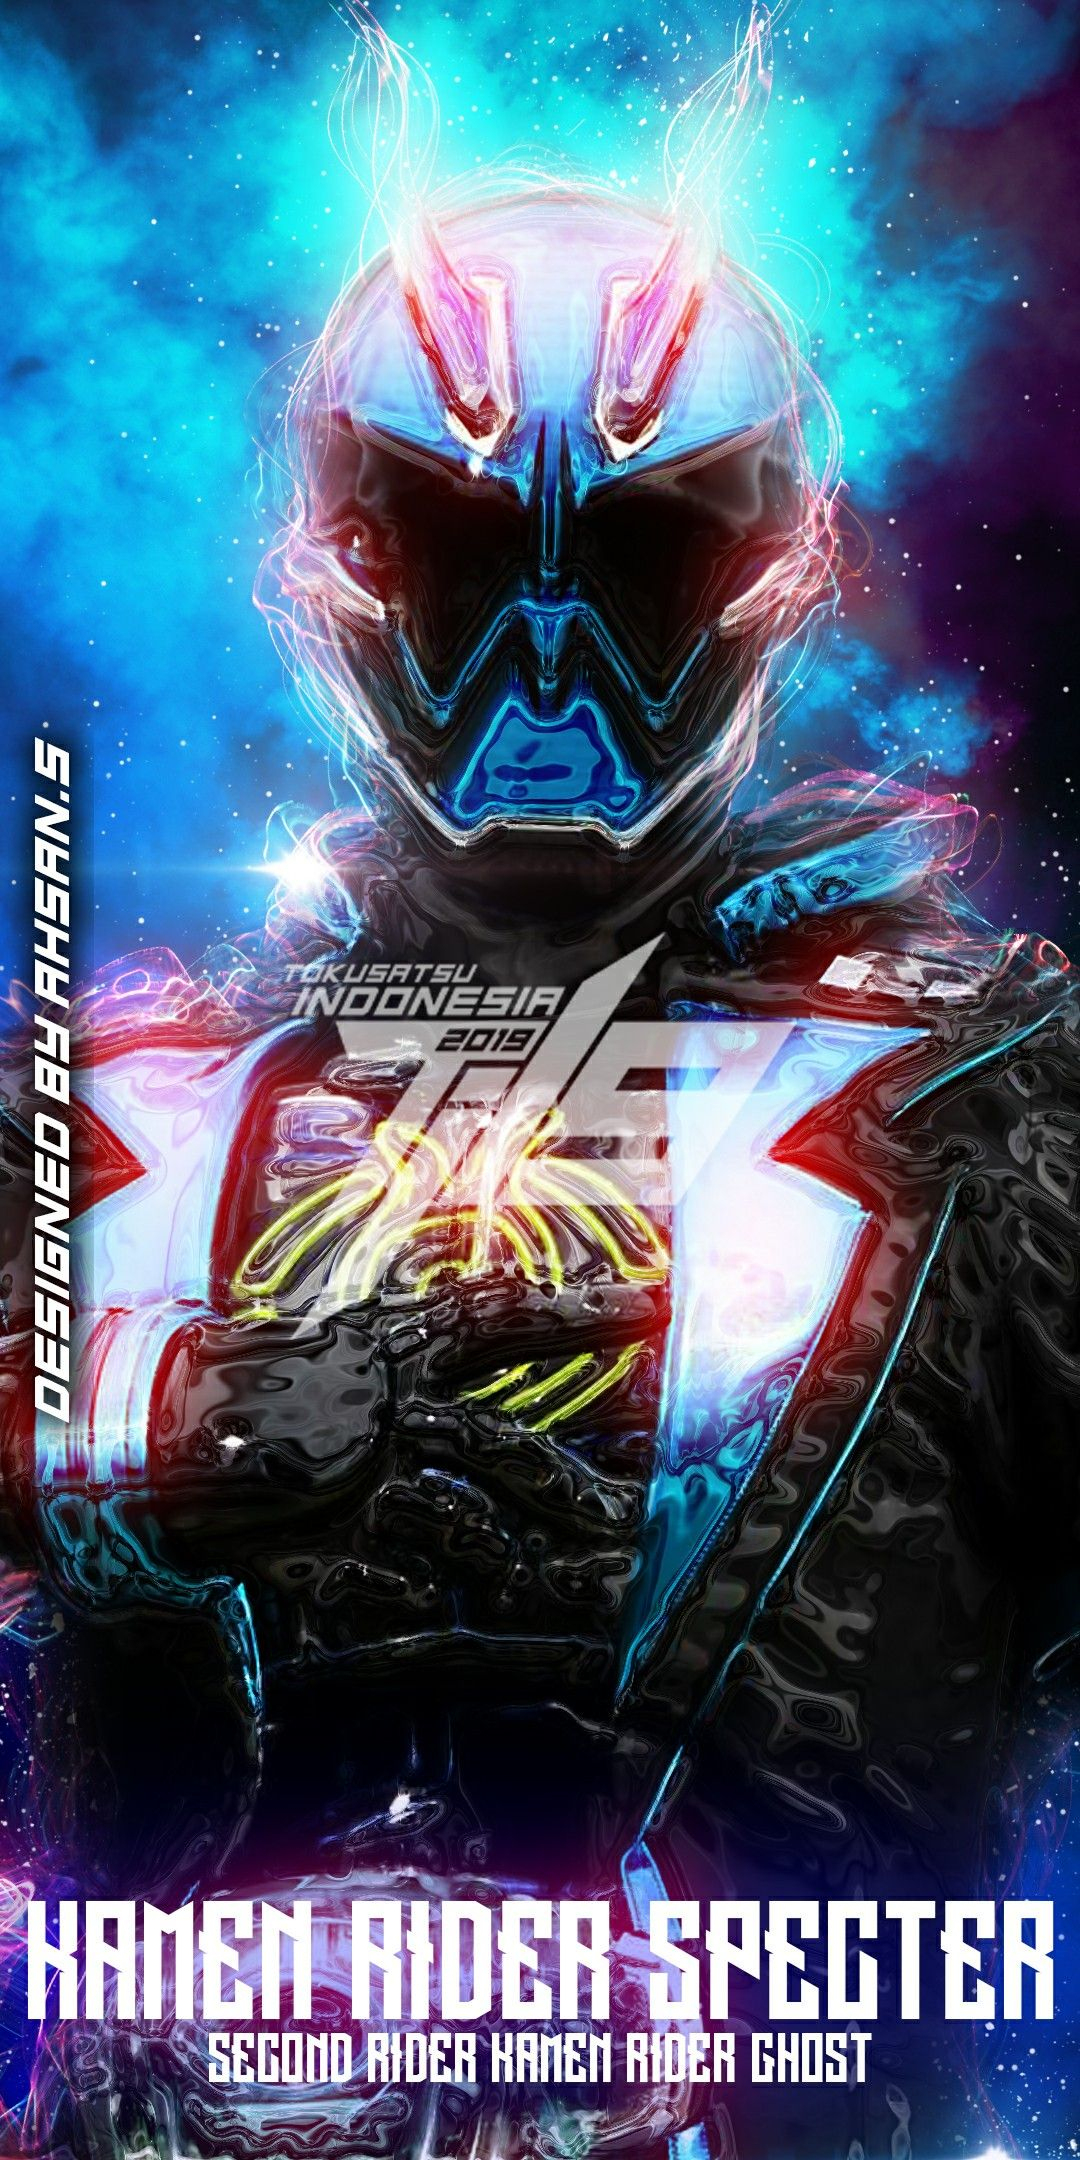 Kamen Rider Saber Wallpaper Hd 4K - Gambar Ngetrend Dan Viral serapportantà Kamen Rider Wallpaper 4K 